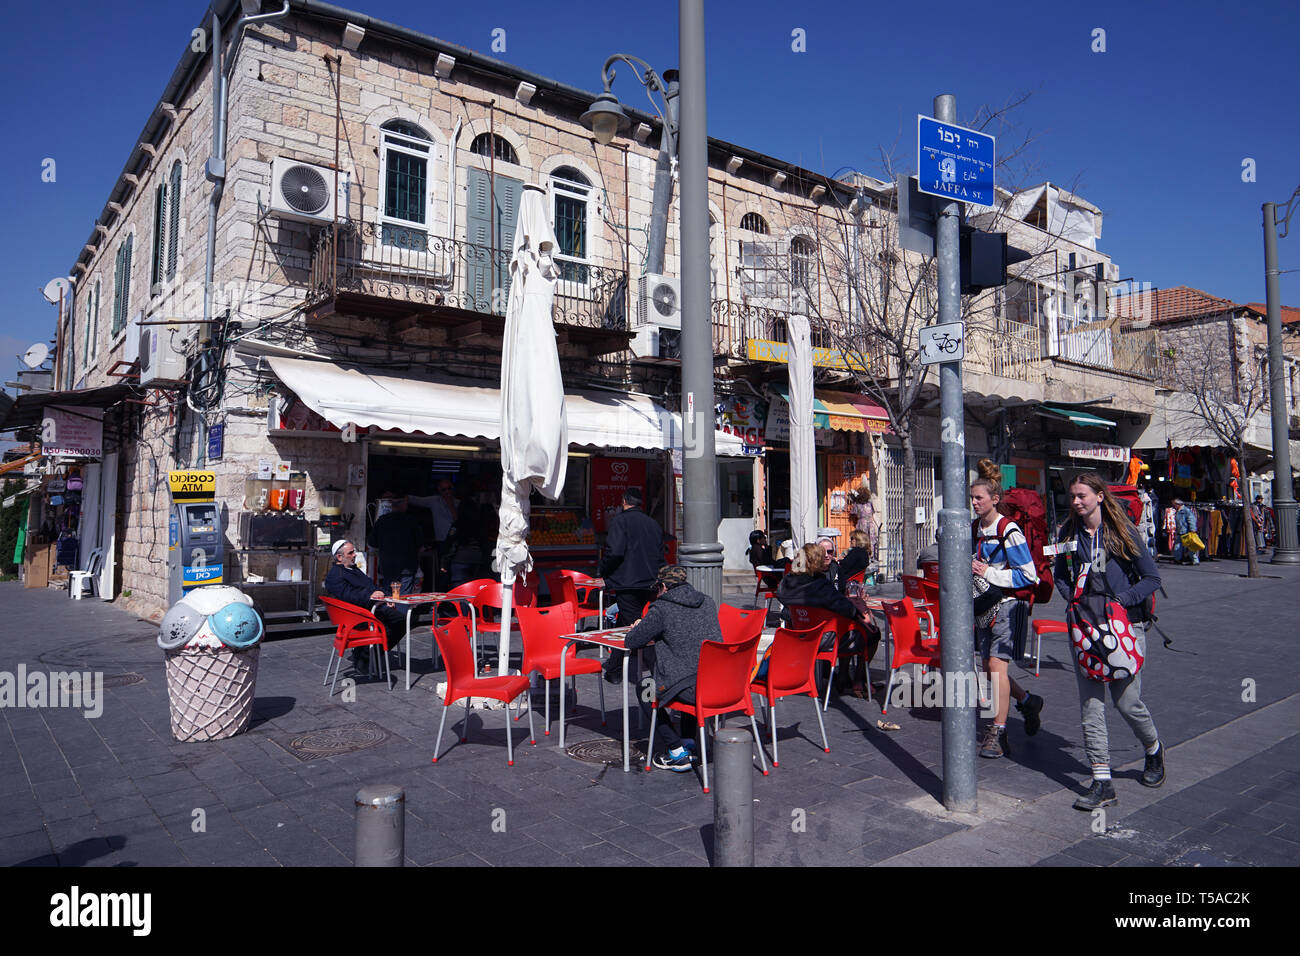 ISRAEL - JERUSALEM STREET FOTOGRAFIE - Urbane Fotografie - Farbe Fotografie © Frédéric BEAUMONT Stockfoto